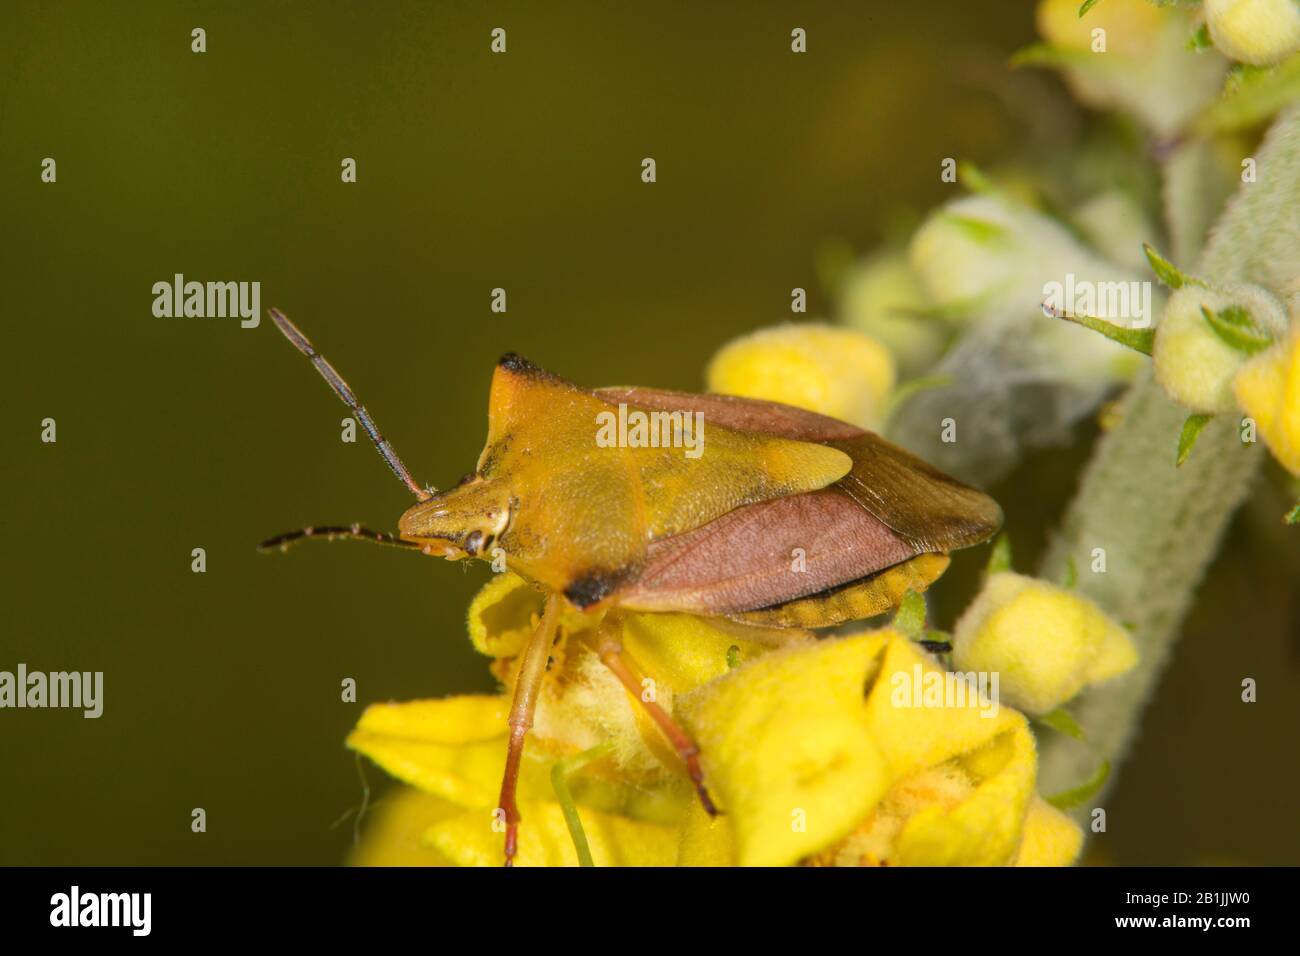 Red shield bug, Skull shield-bug (Carpocoris fuscispinus, Carpocoris mediterraneus atlanticus), sitting on a yellow blossom, side view, Germany Stock Photo